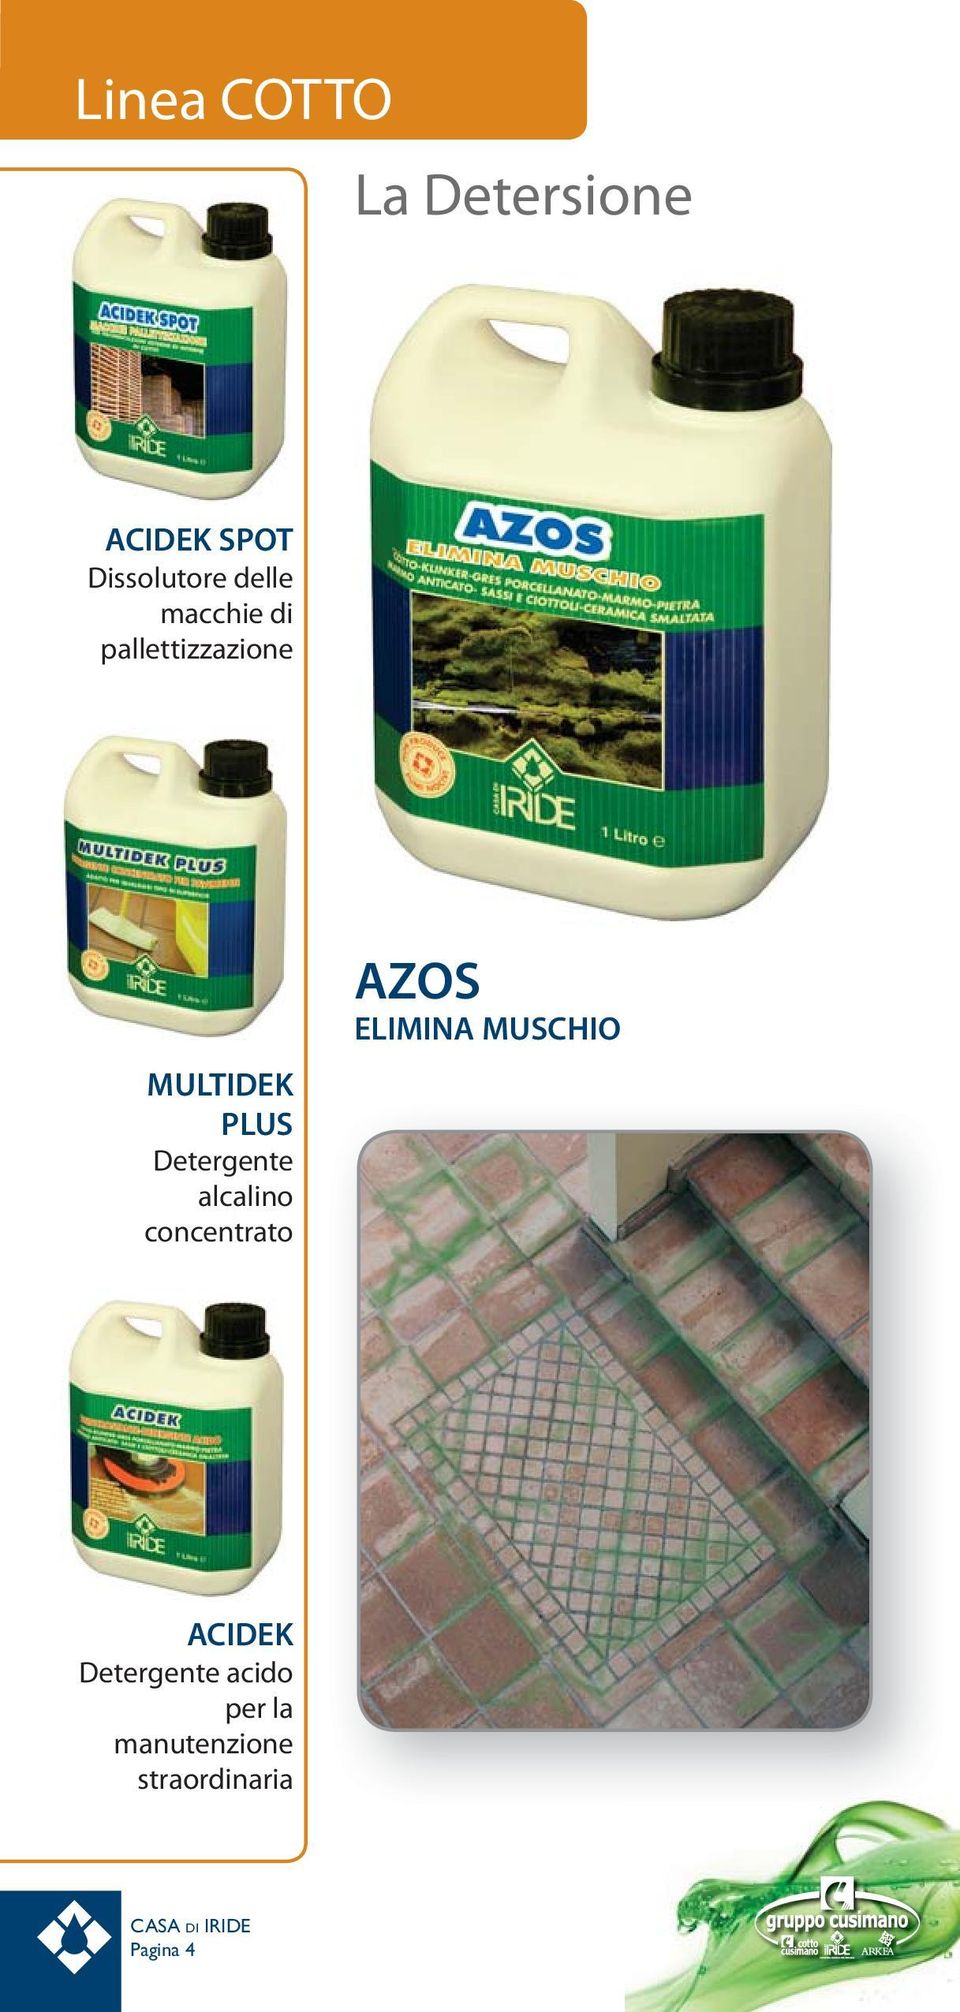 Detergente alcalino concentrato AZOS ELIMINA MUSCHIO